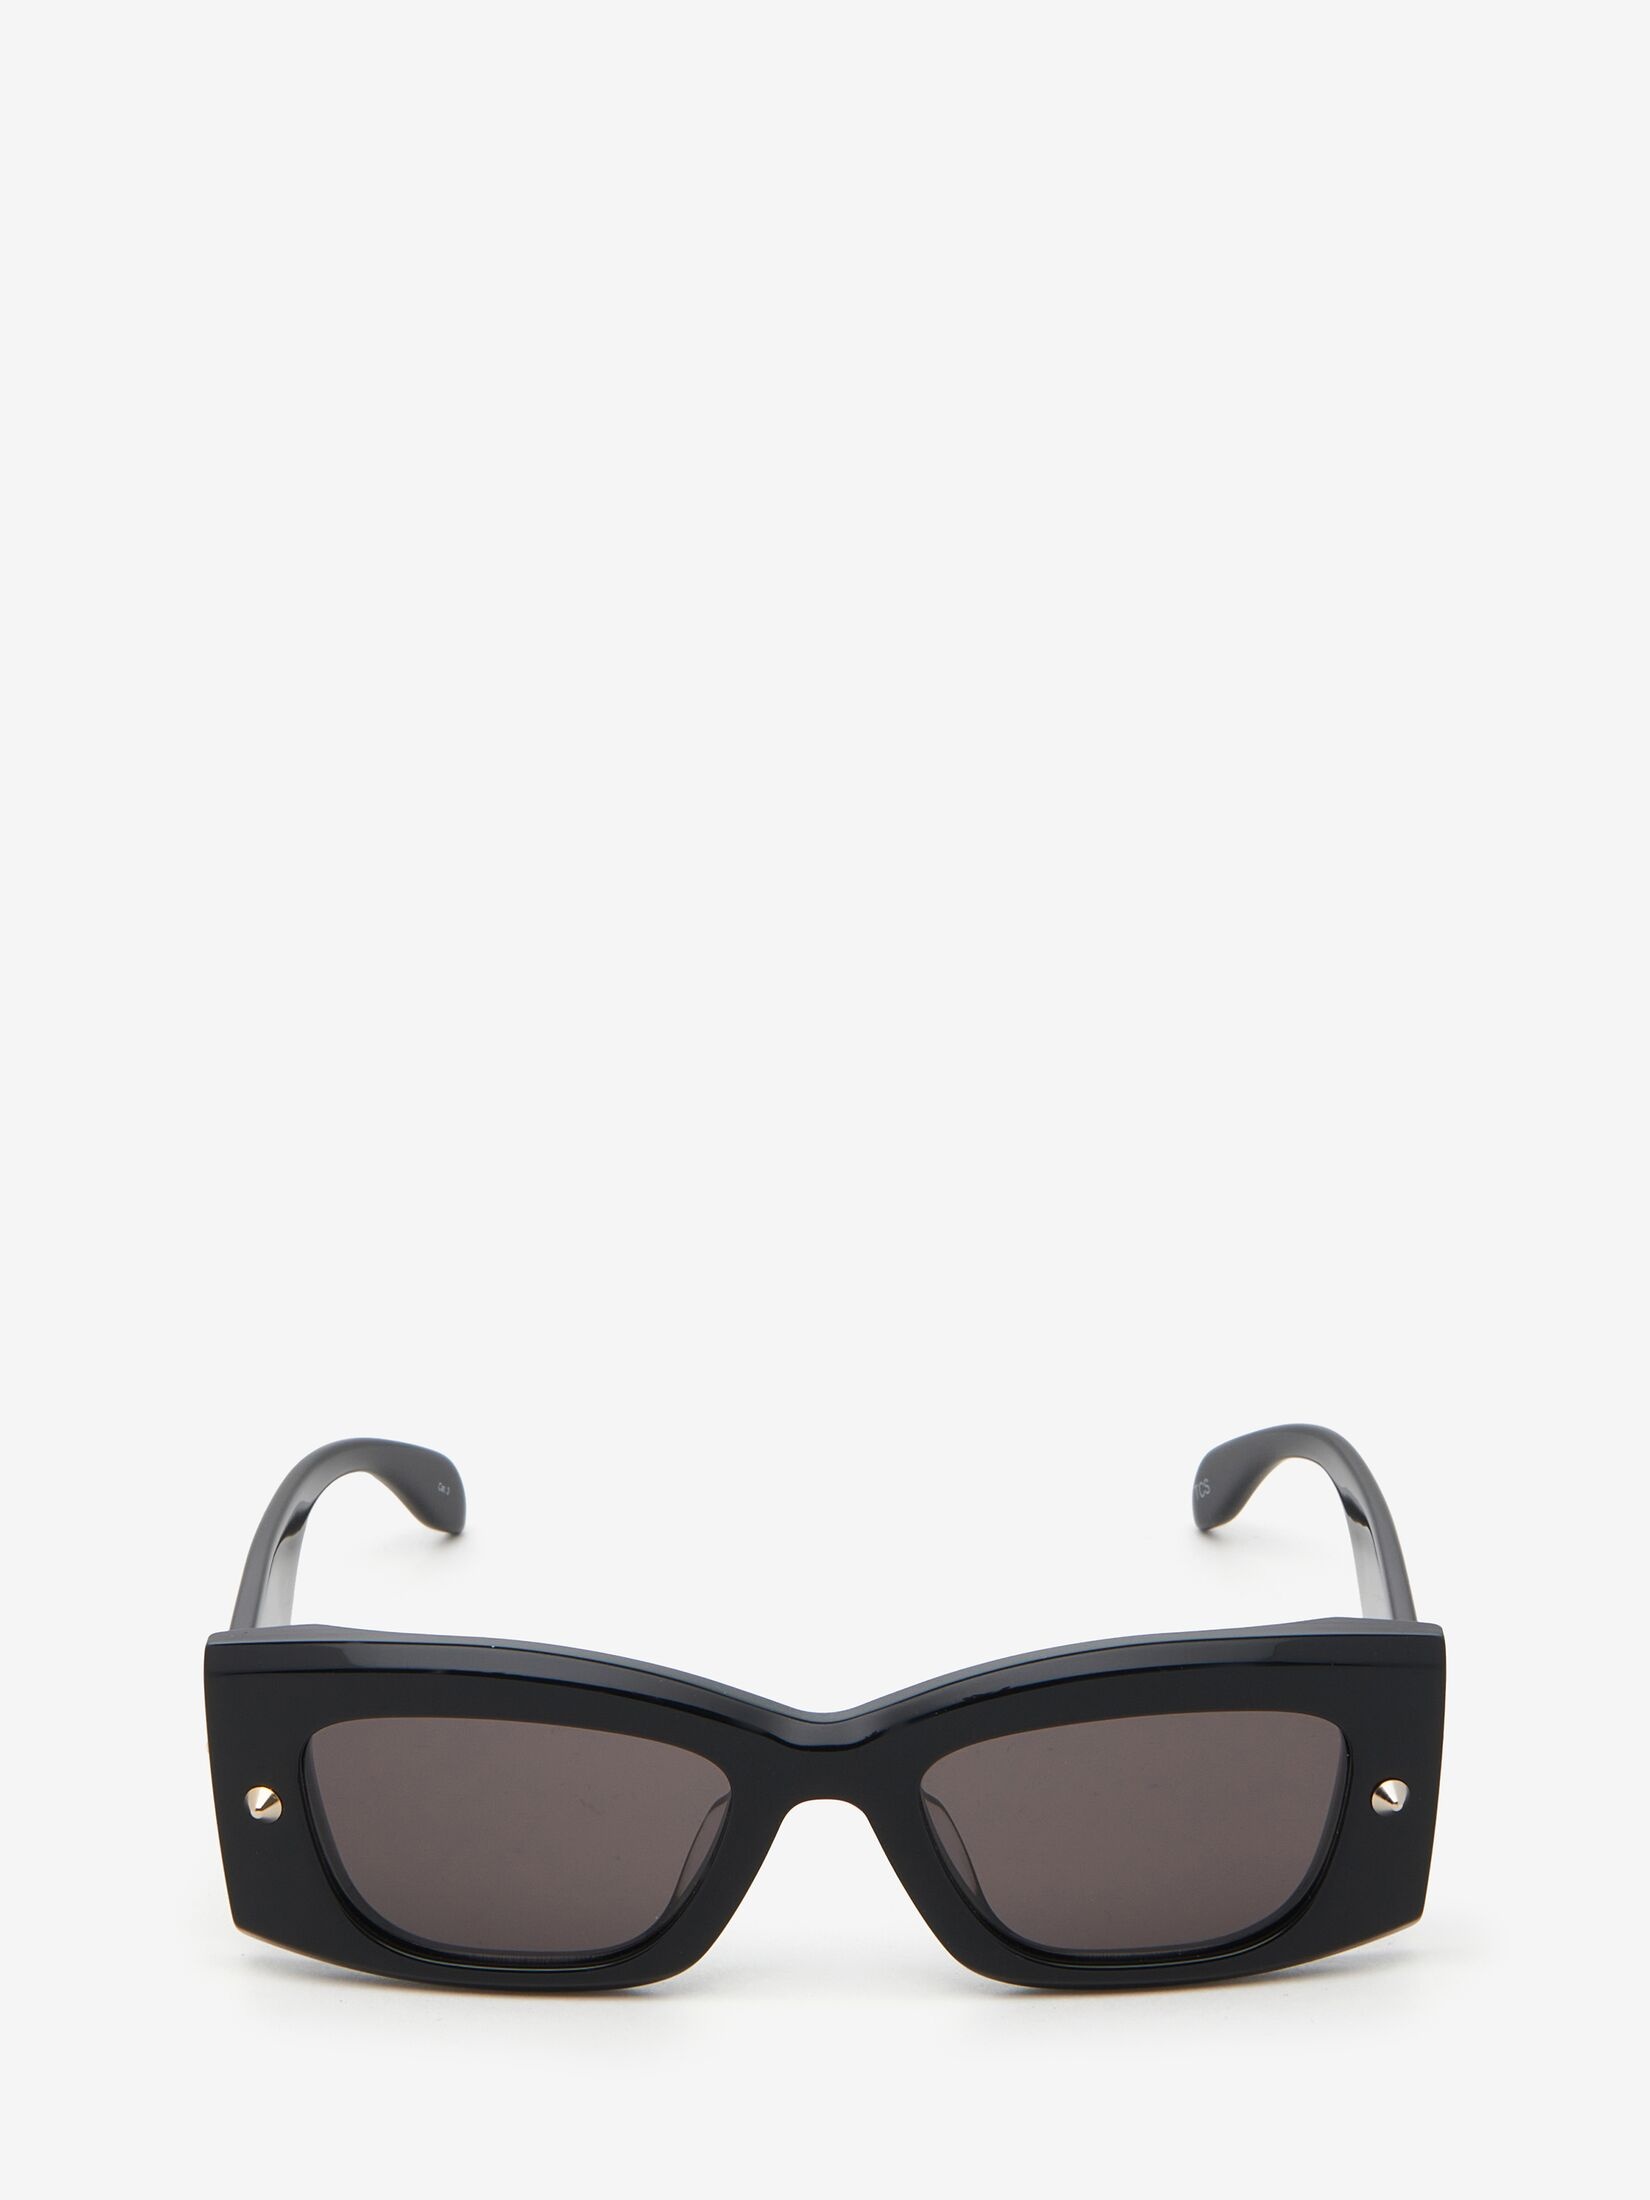 Spike Studs Rectangular Sunglasses in Black/smoke - 1